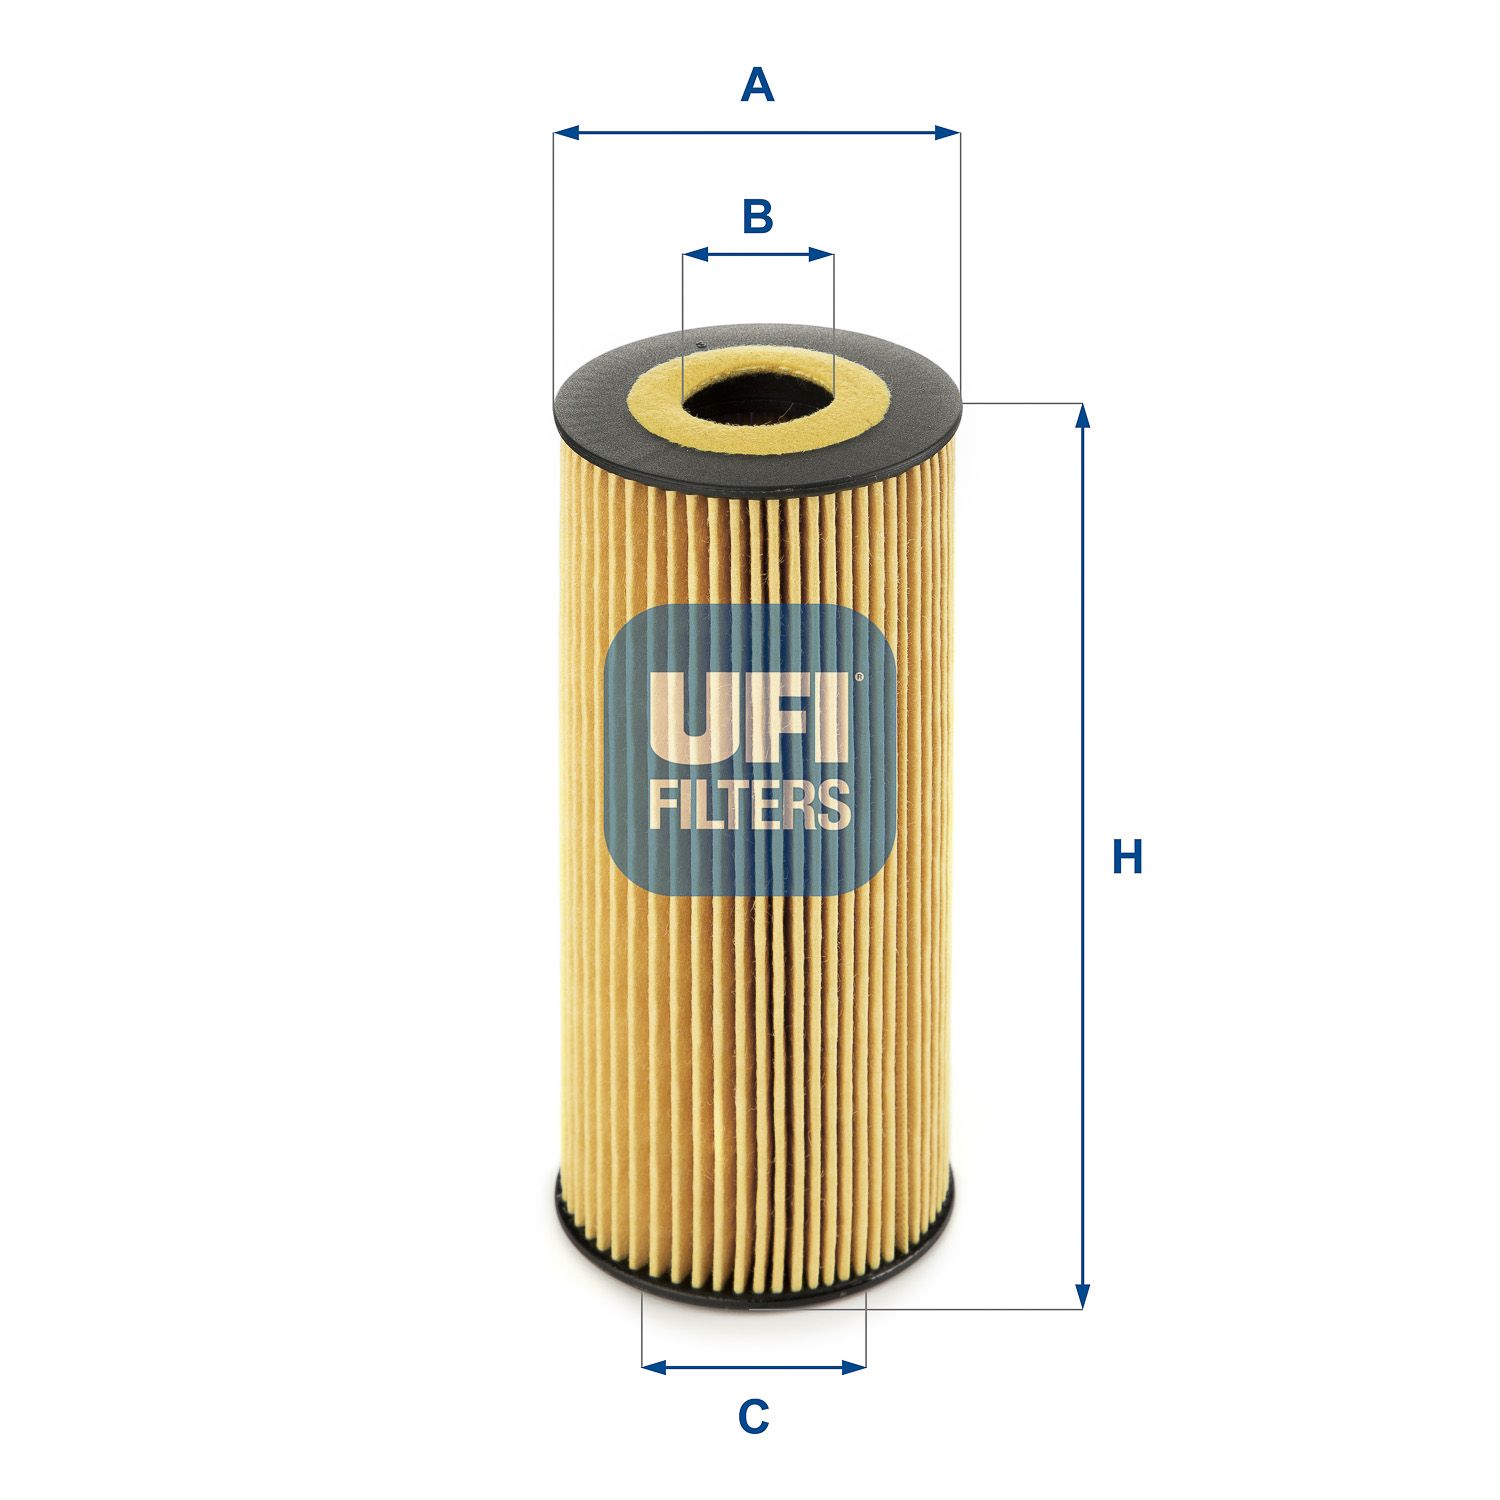 Olejový filtr UFI 25.198.00